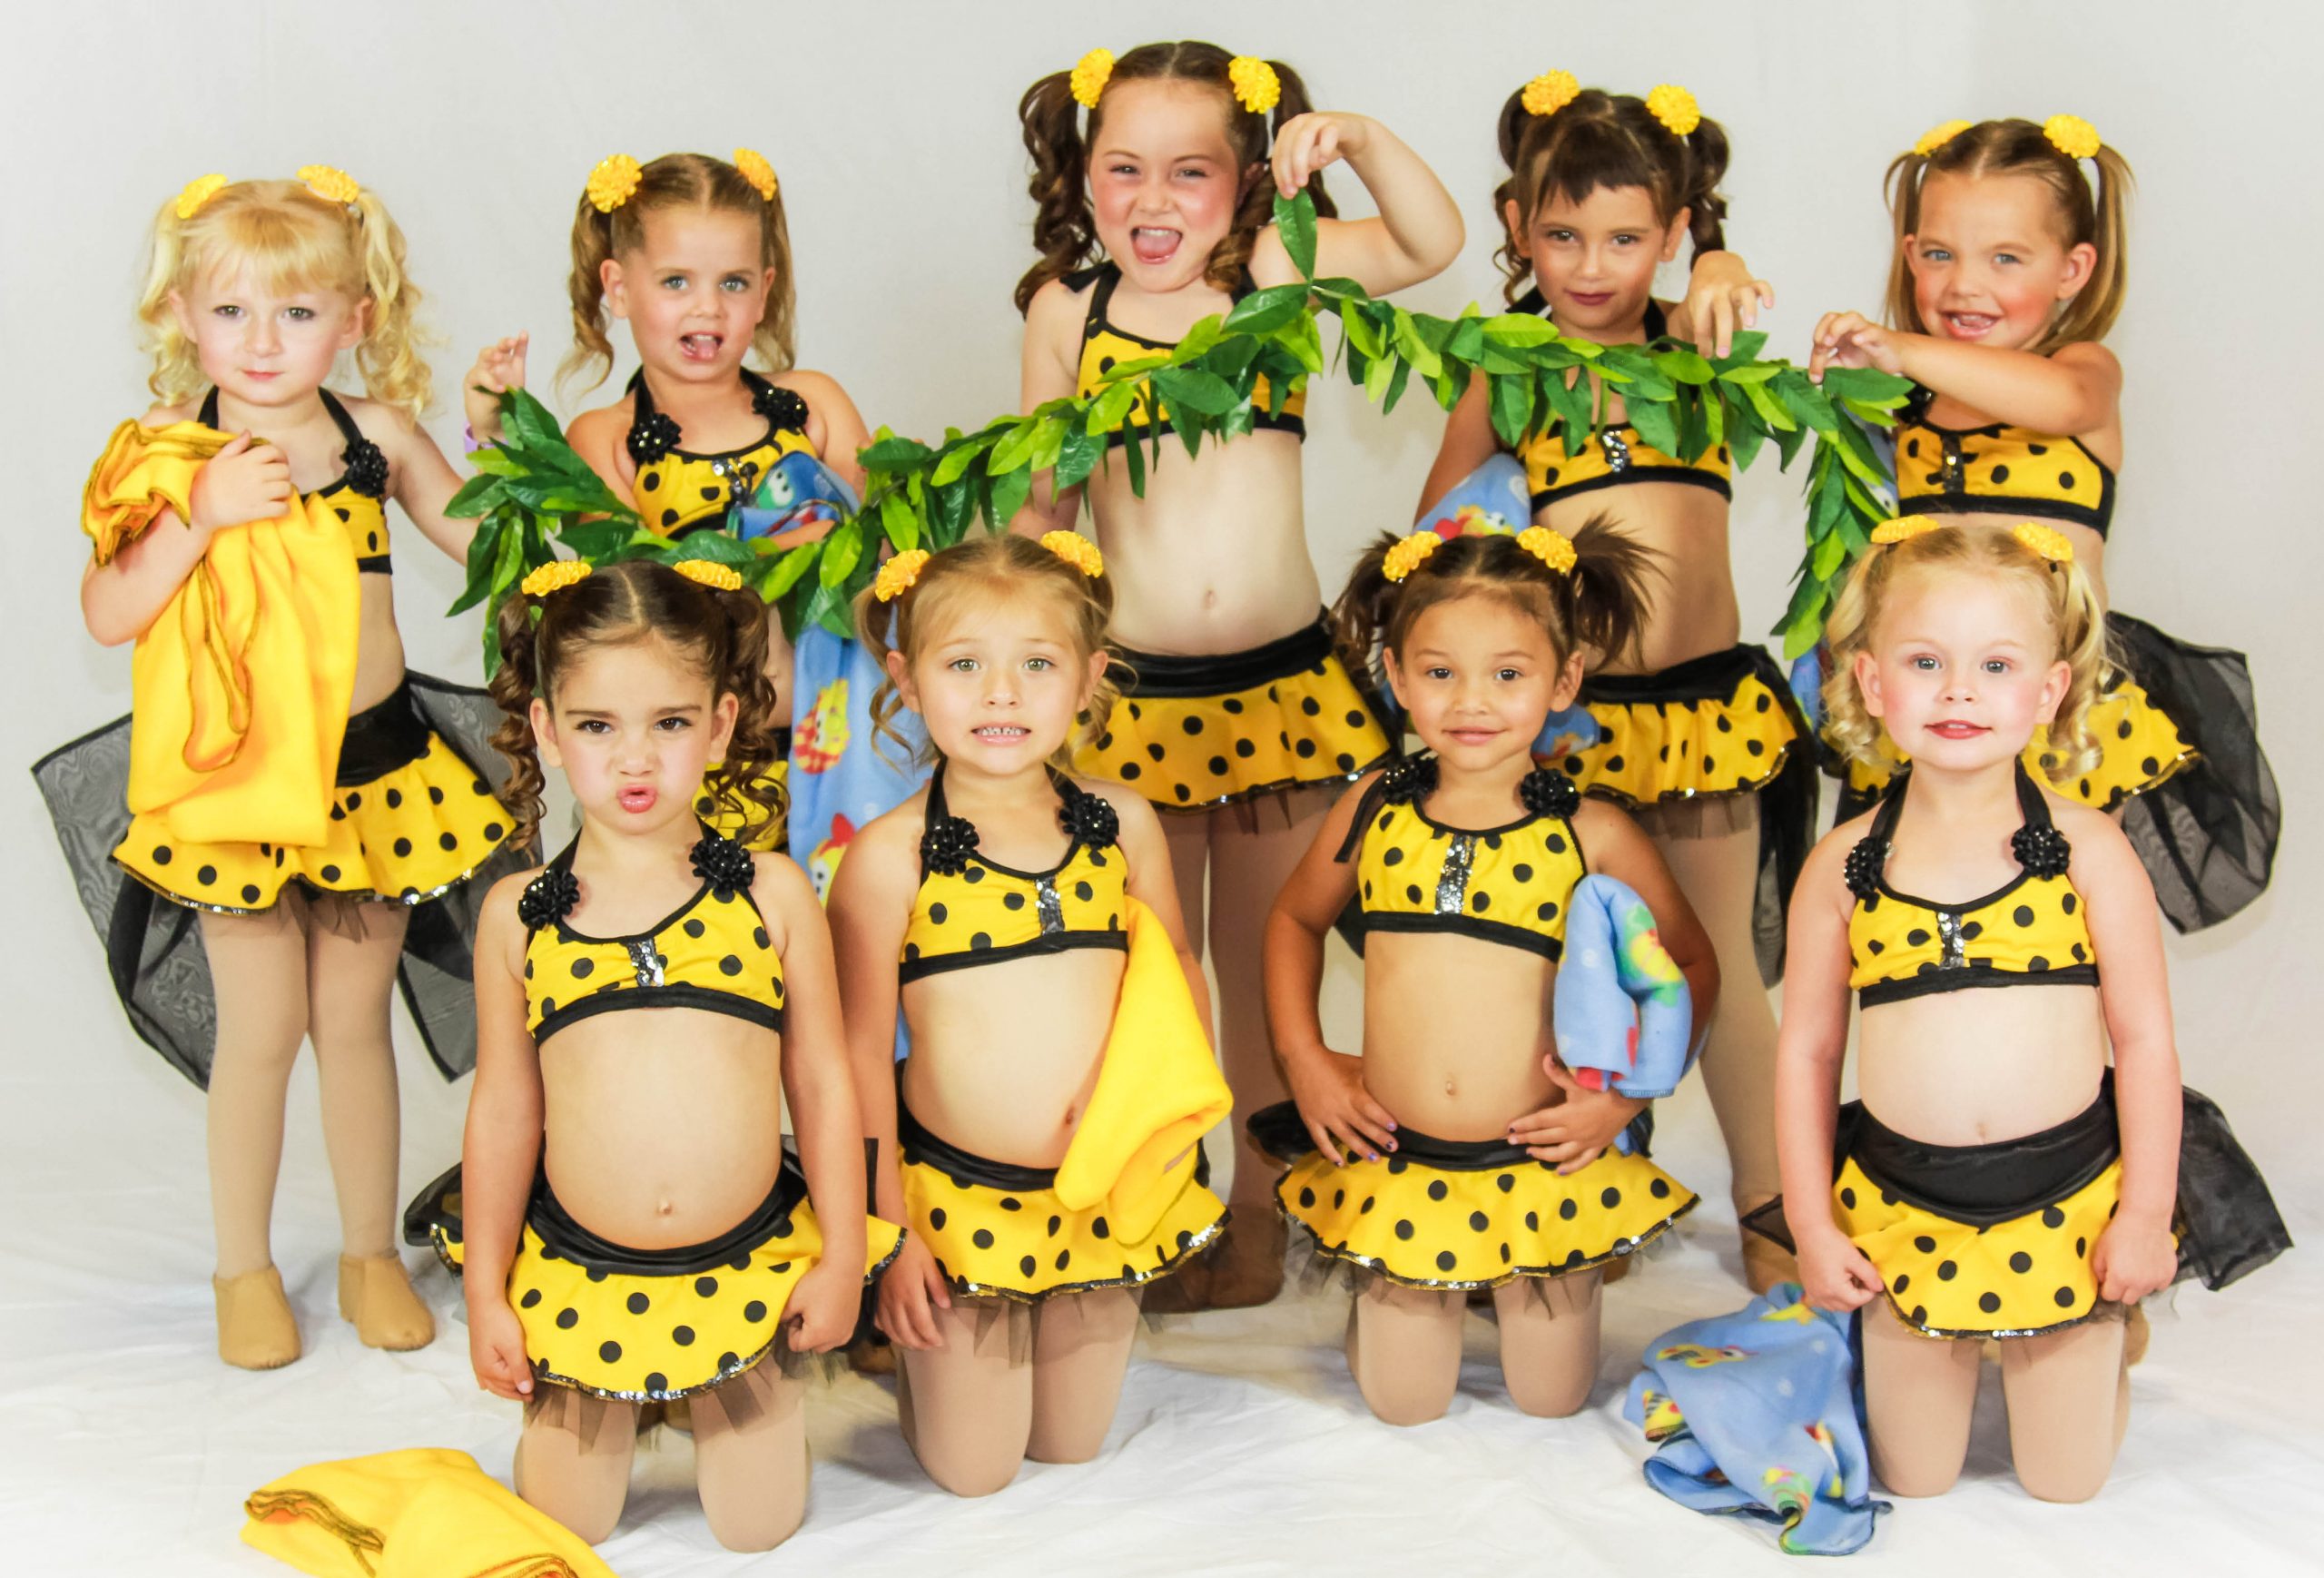 Itsy Bitsy Teeny Weenie Yellow Polka Dot Bikini group costume by HotMess Dance Apparel